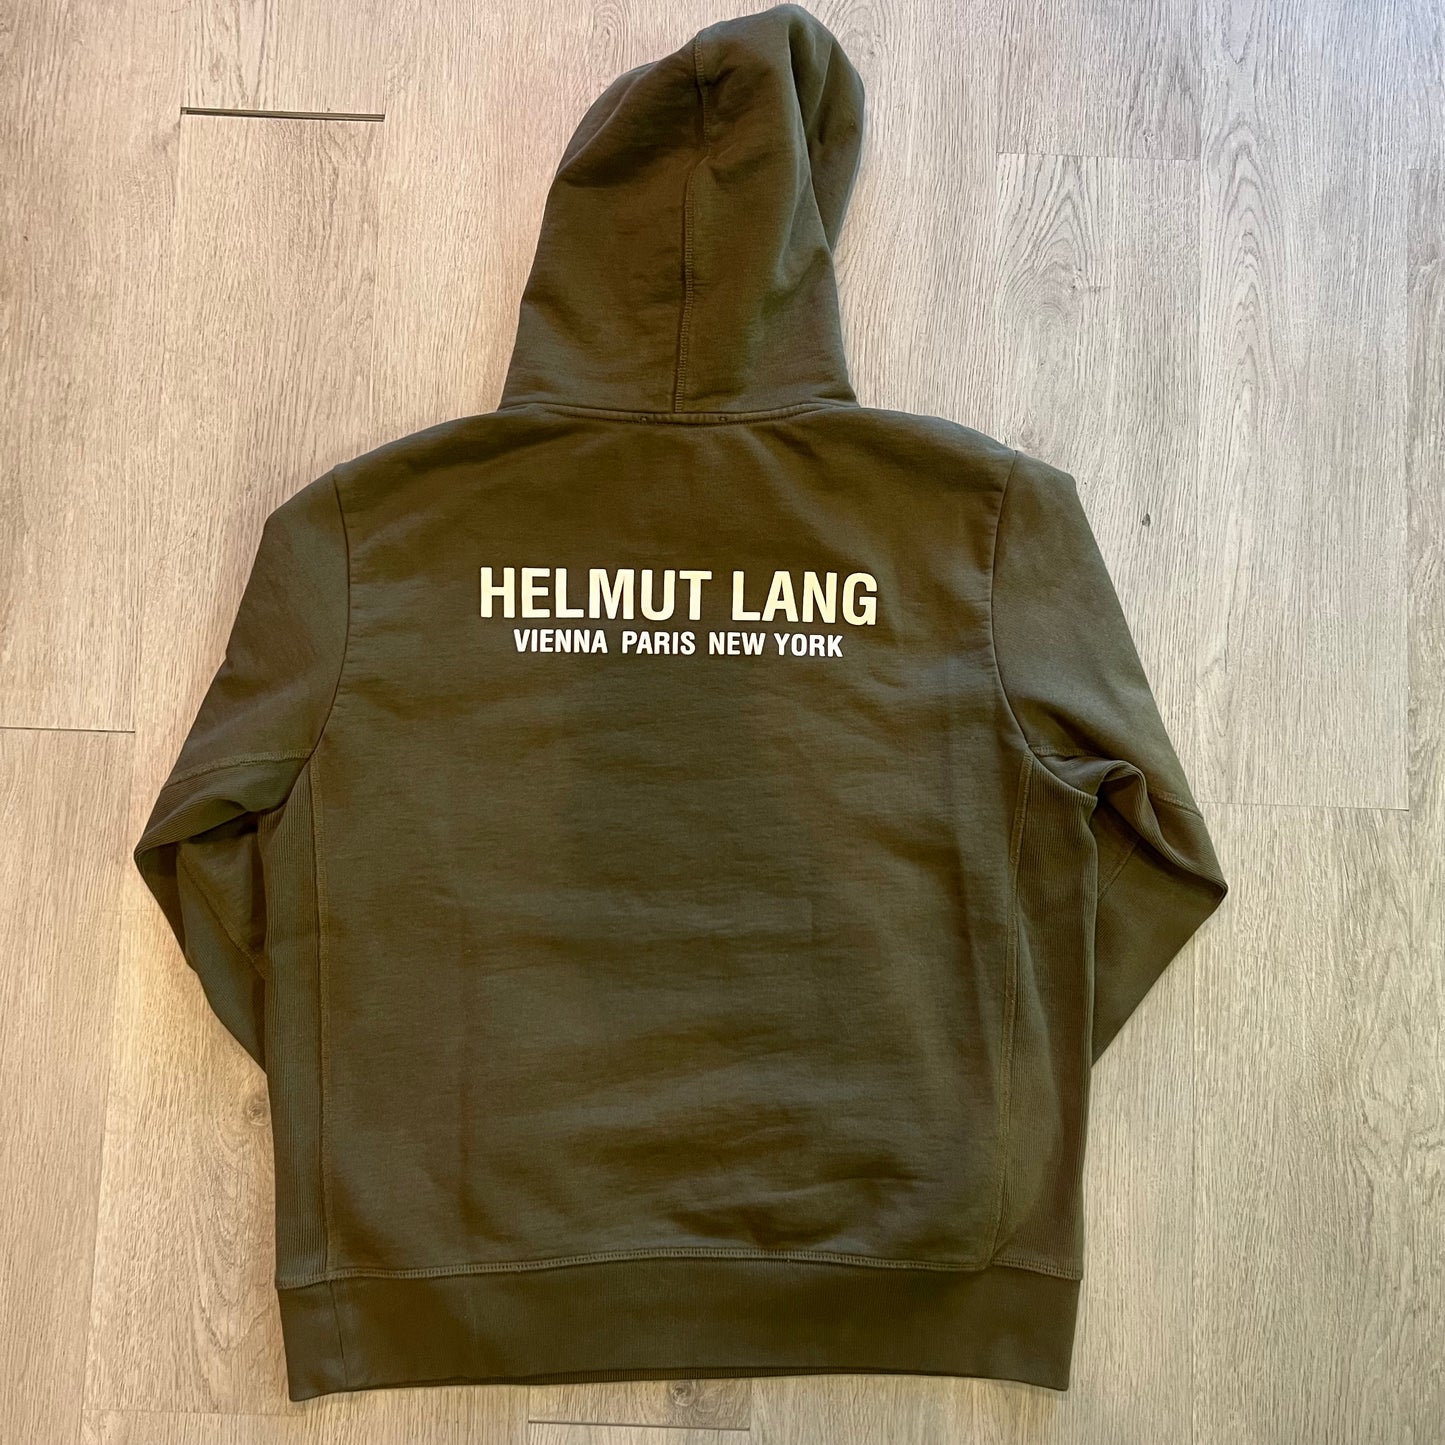 Helmut Lang Hooded jumper 'Sleeve Strap Hoodie' olive - Preowned